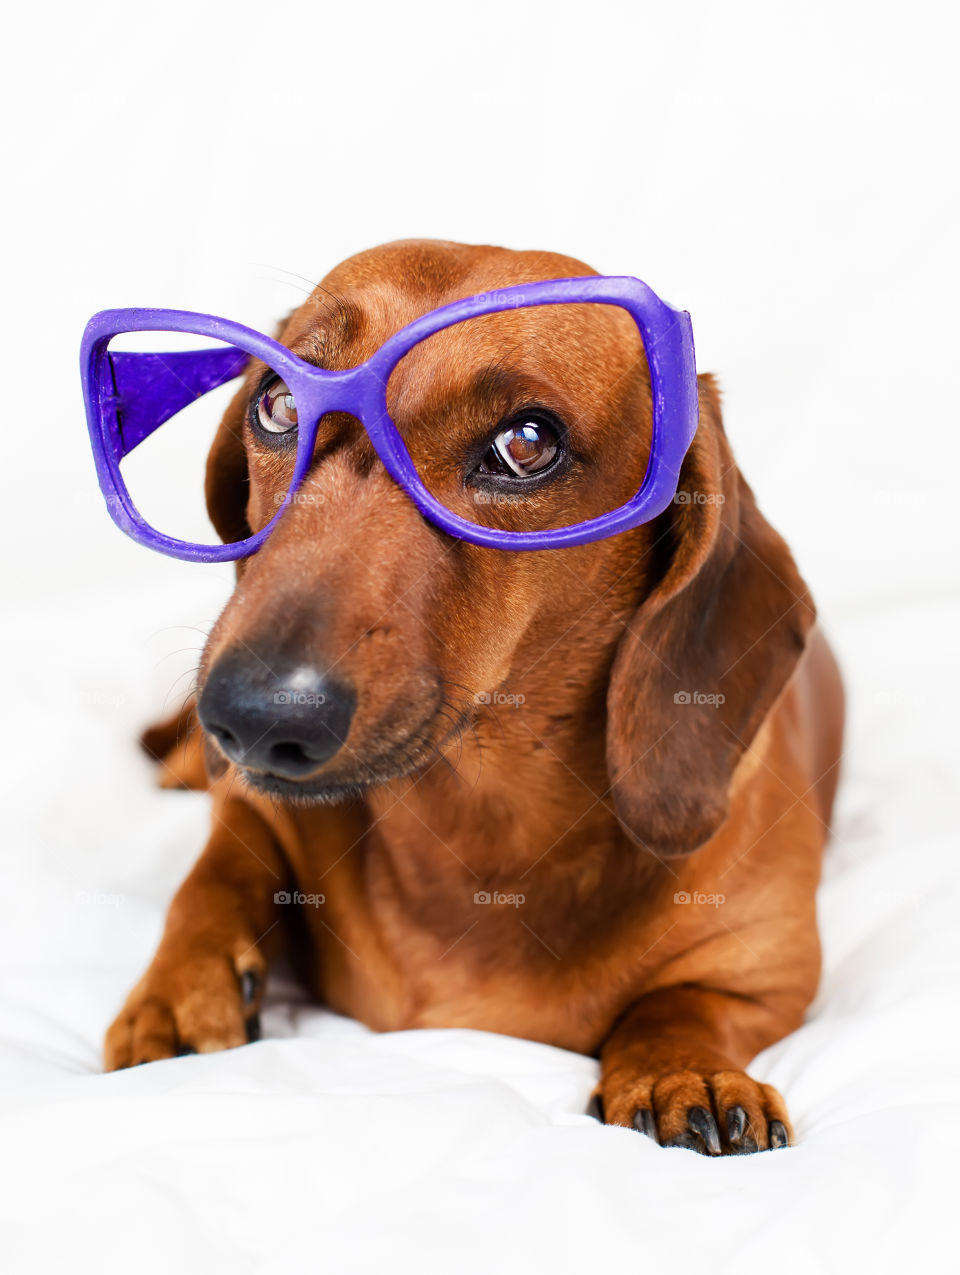 Cute dog wearing purple sunglasses